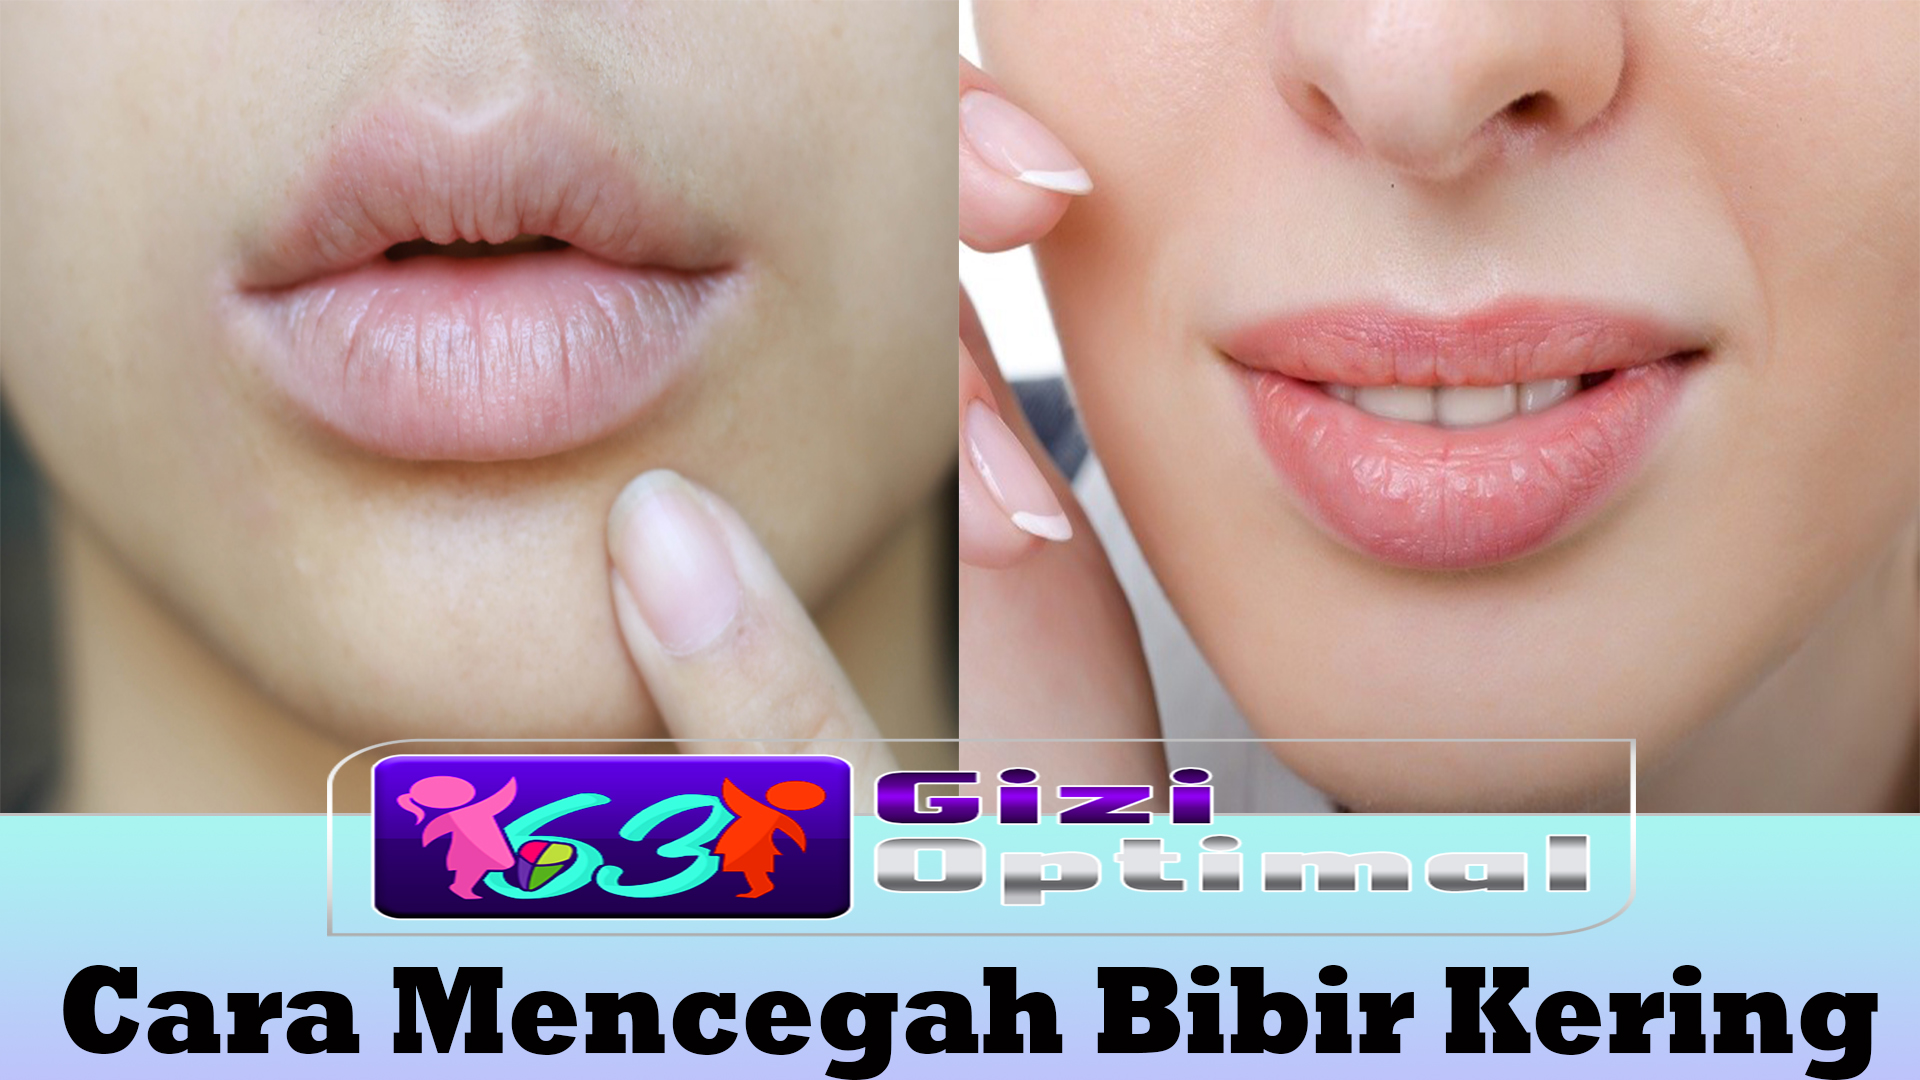 Cara Mencegah Bibir Kering